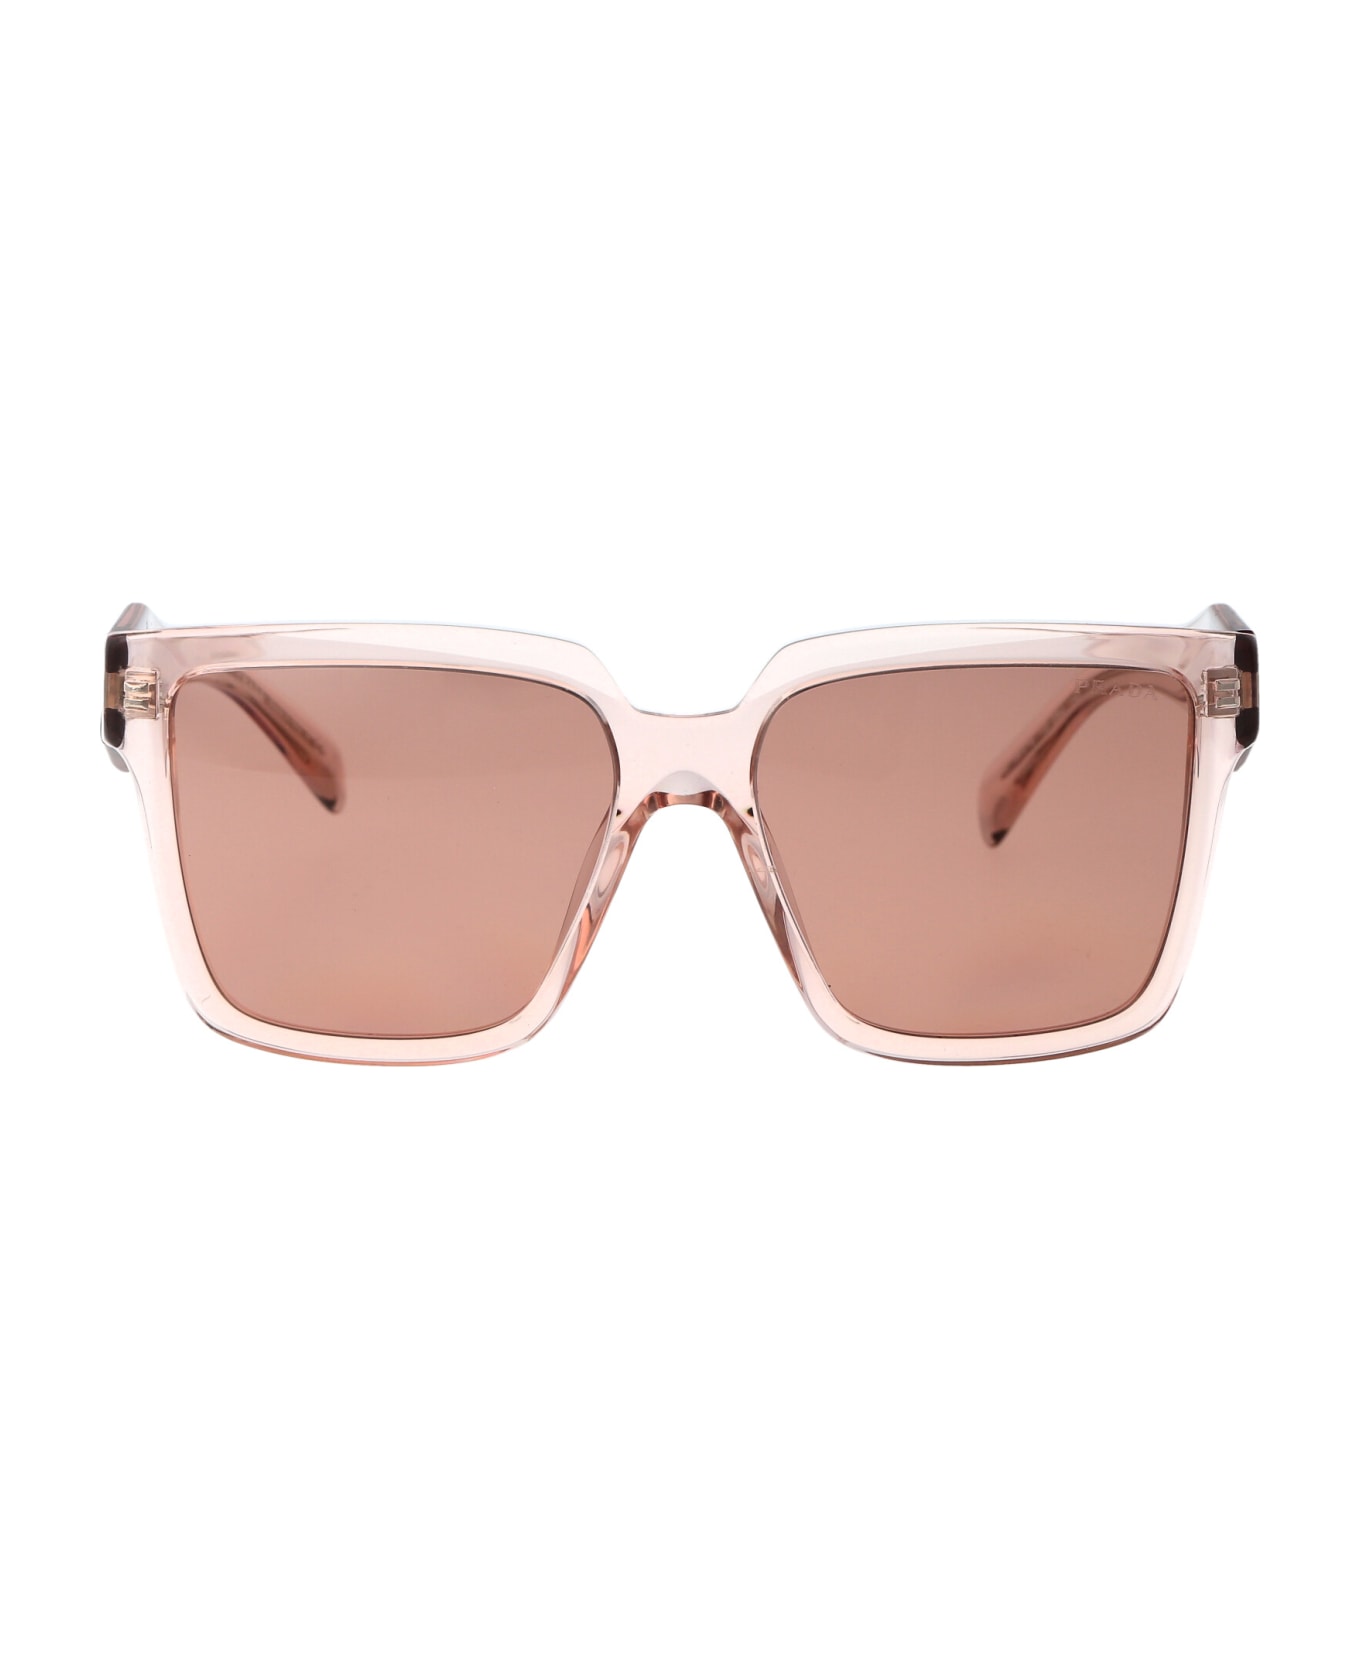 Prada Eyewear 0pr 24zs Sunglasses - 13I08M Geranium/Petal Crystal